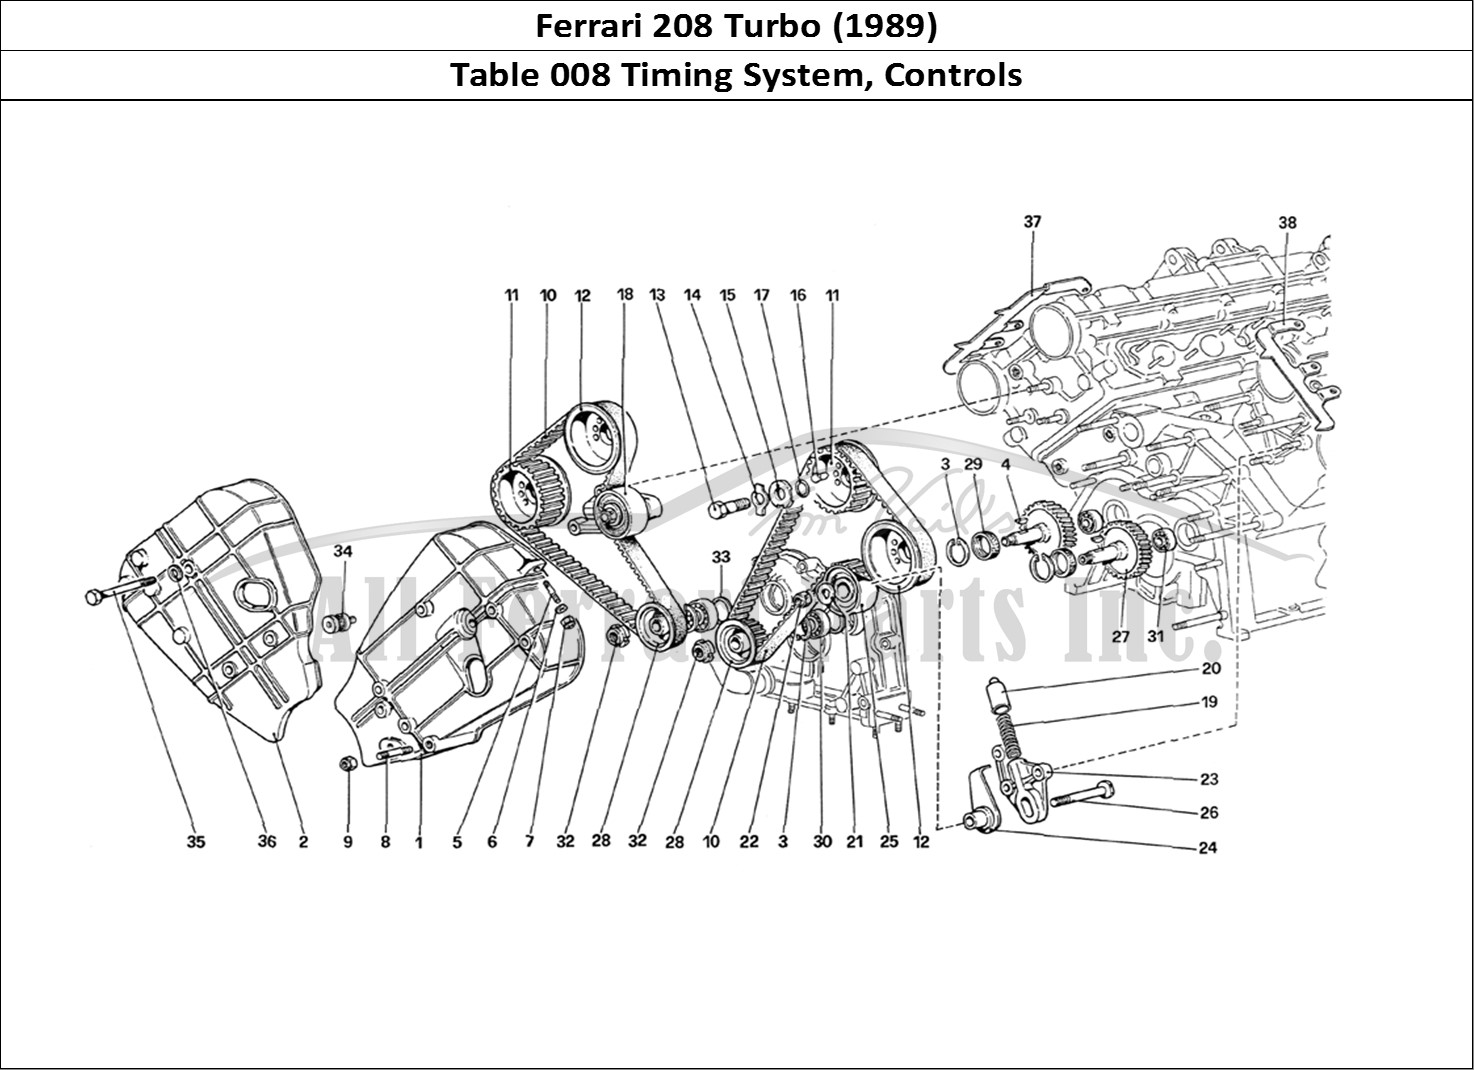 Ferrari Parts Ferrari 208 Turbo (1989) Page 008 Timing System - Controls